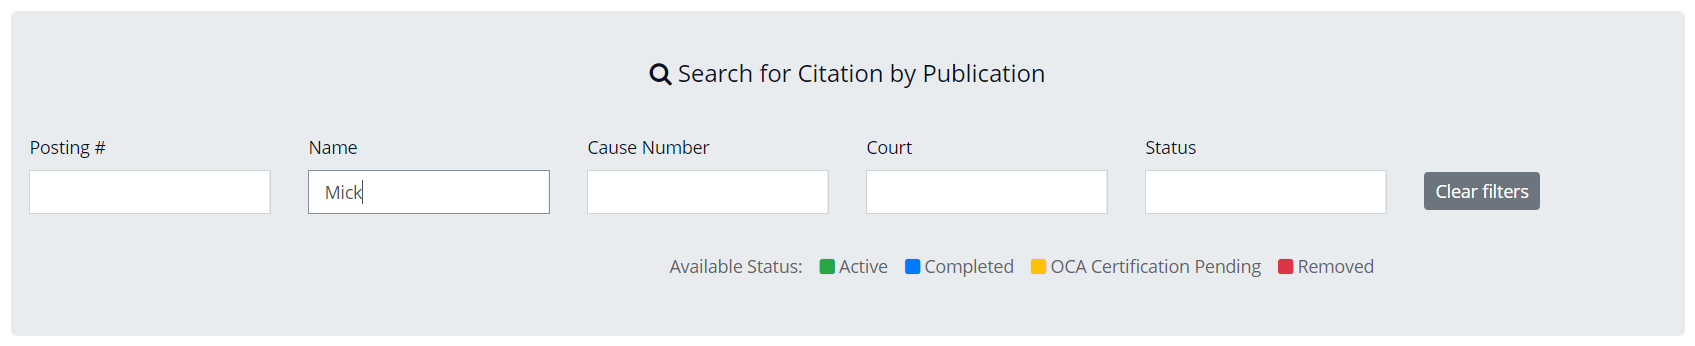 CBP Clerk 24 Search for Citation by Publication Form